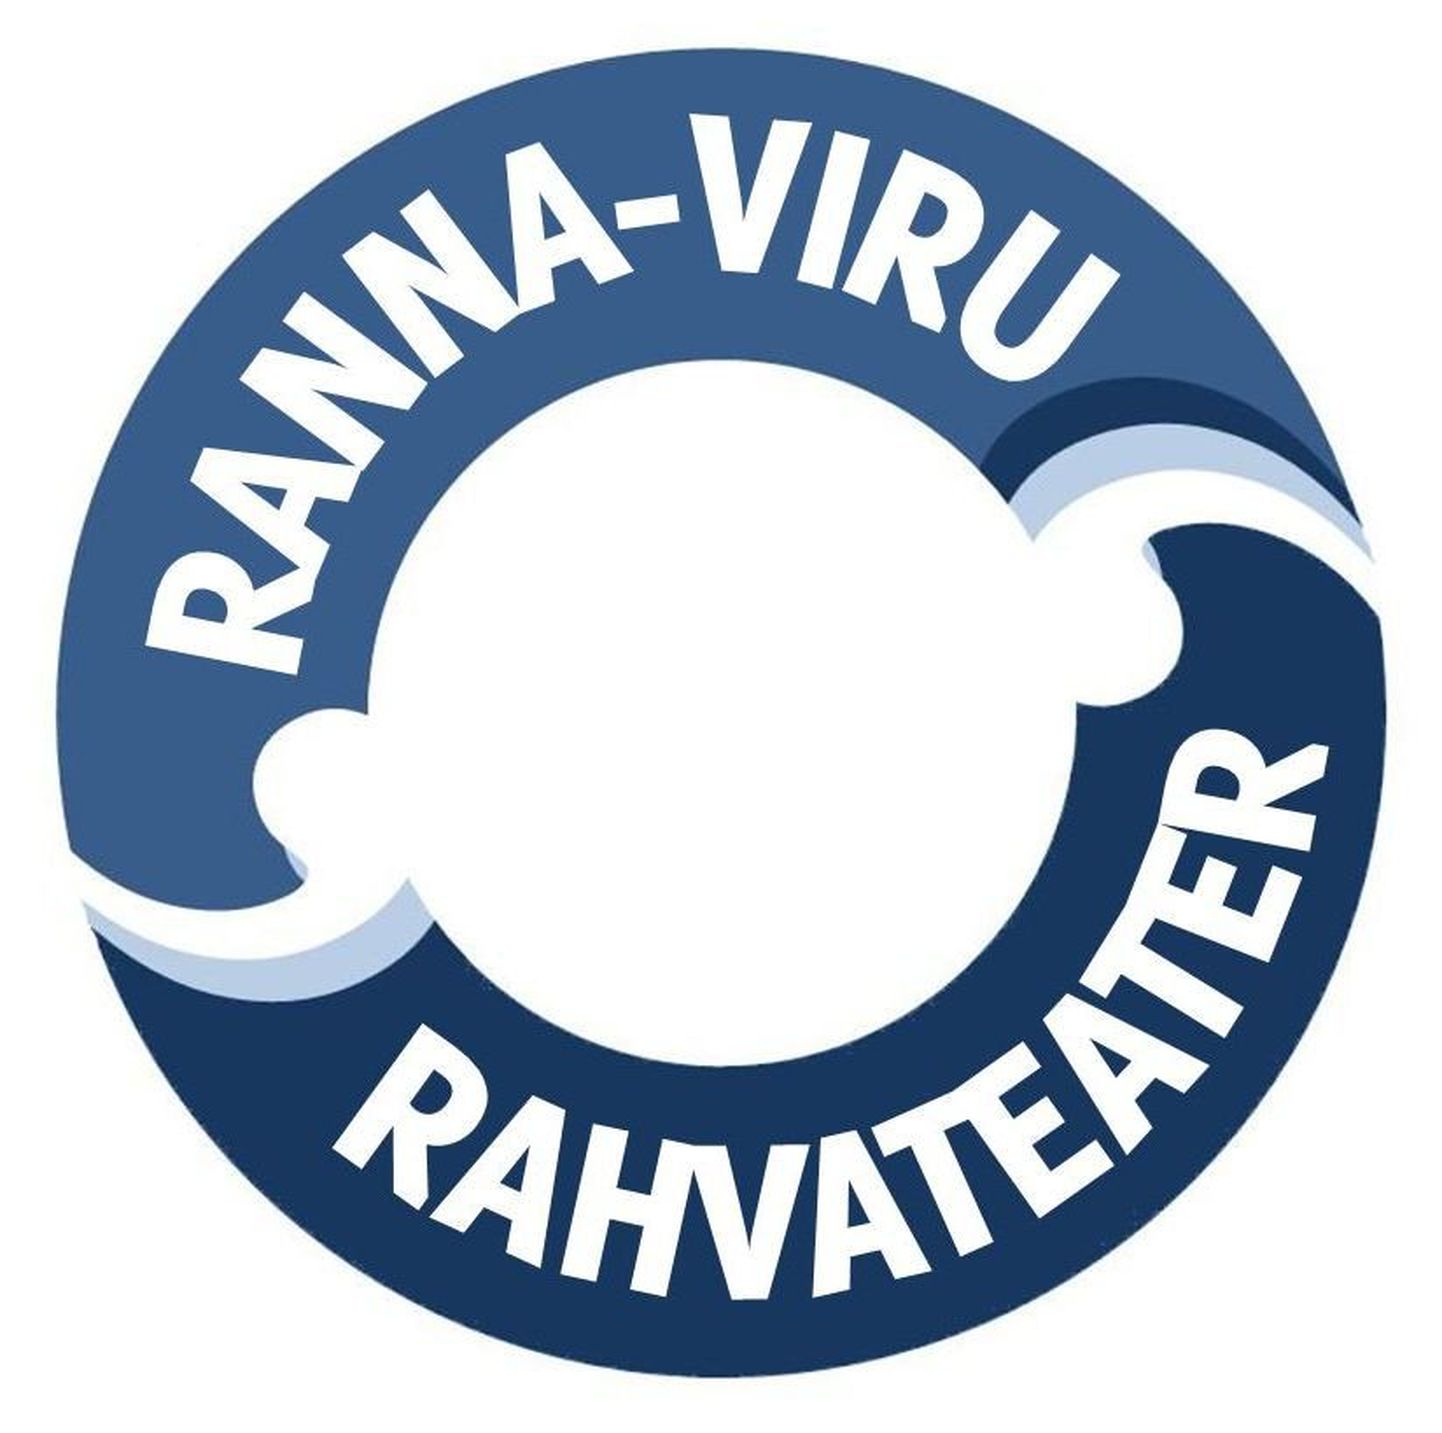 Ranna-Viru Rahvateater